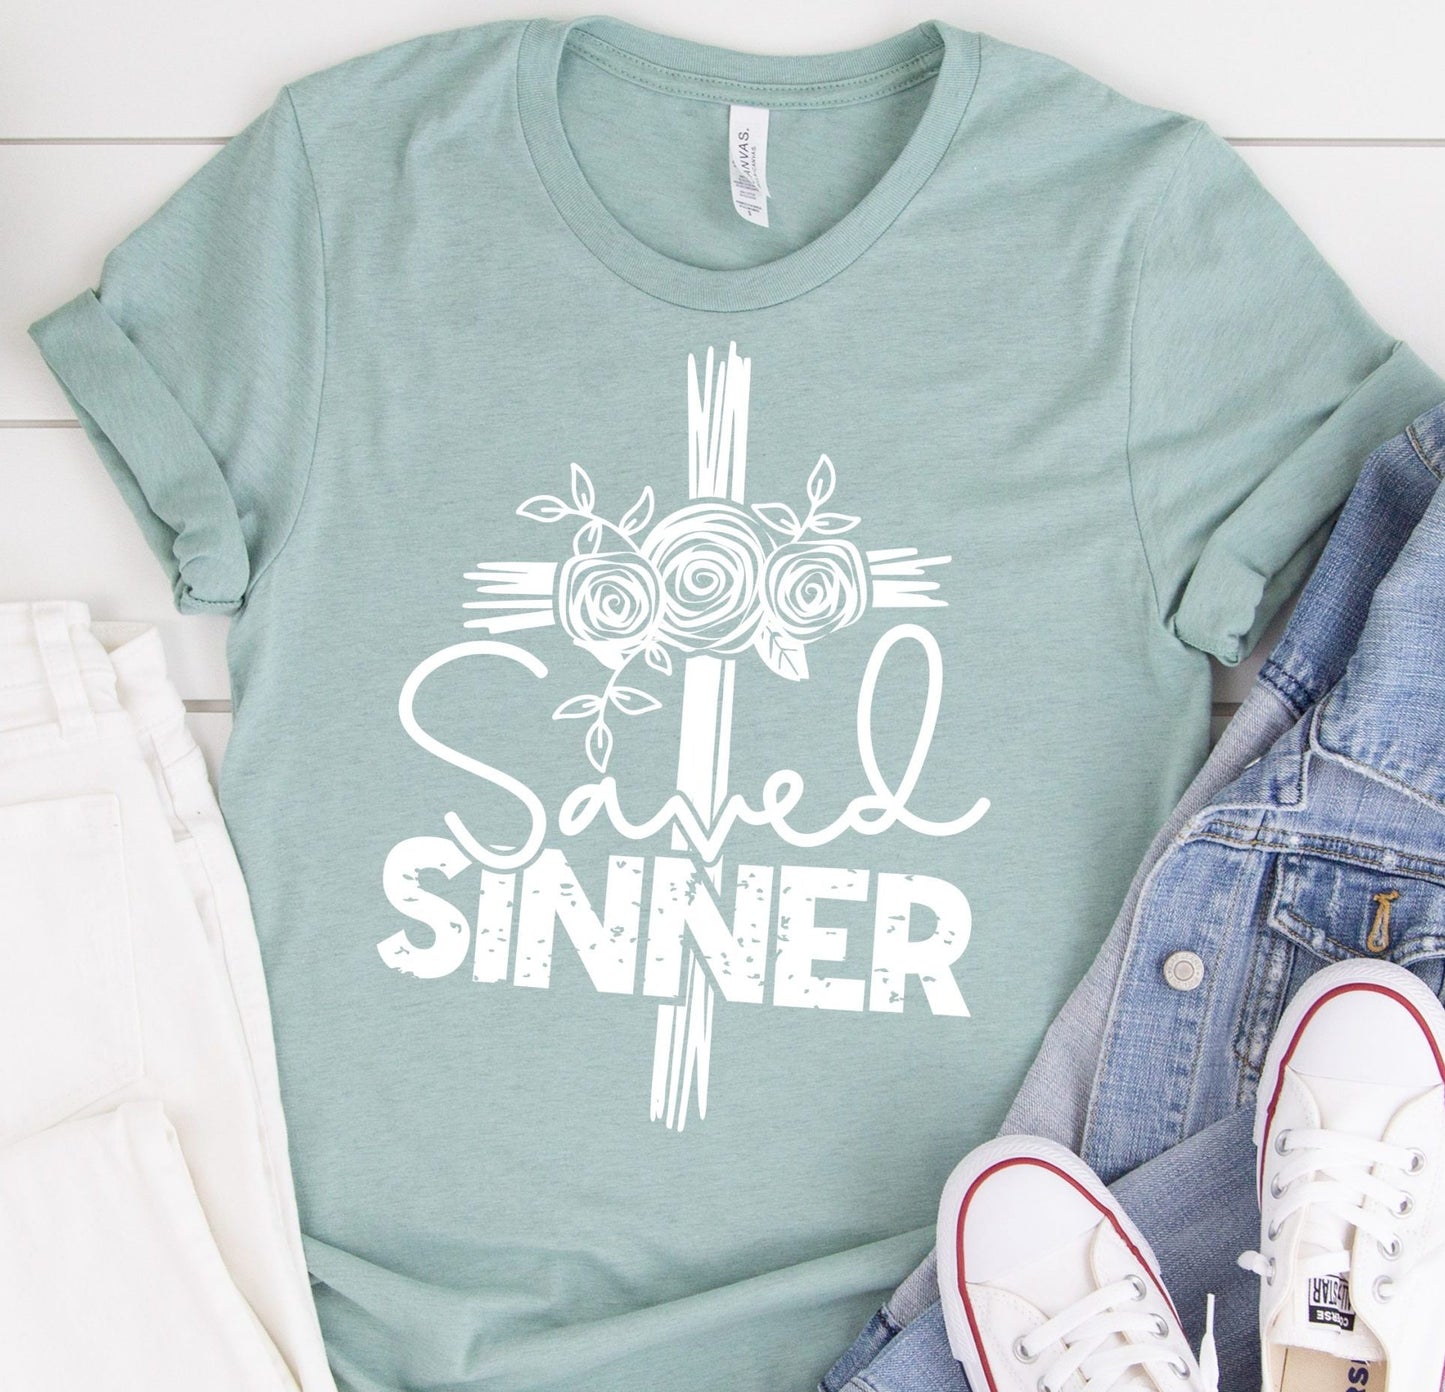 Saved sinner